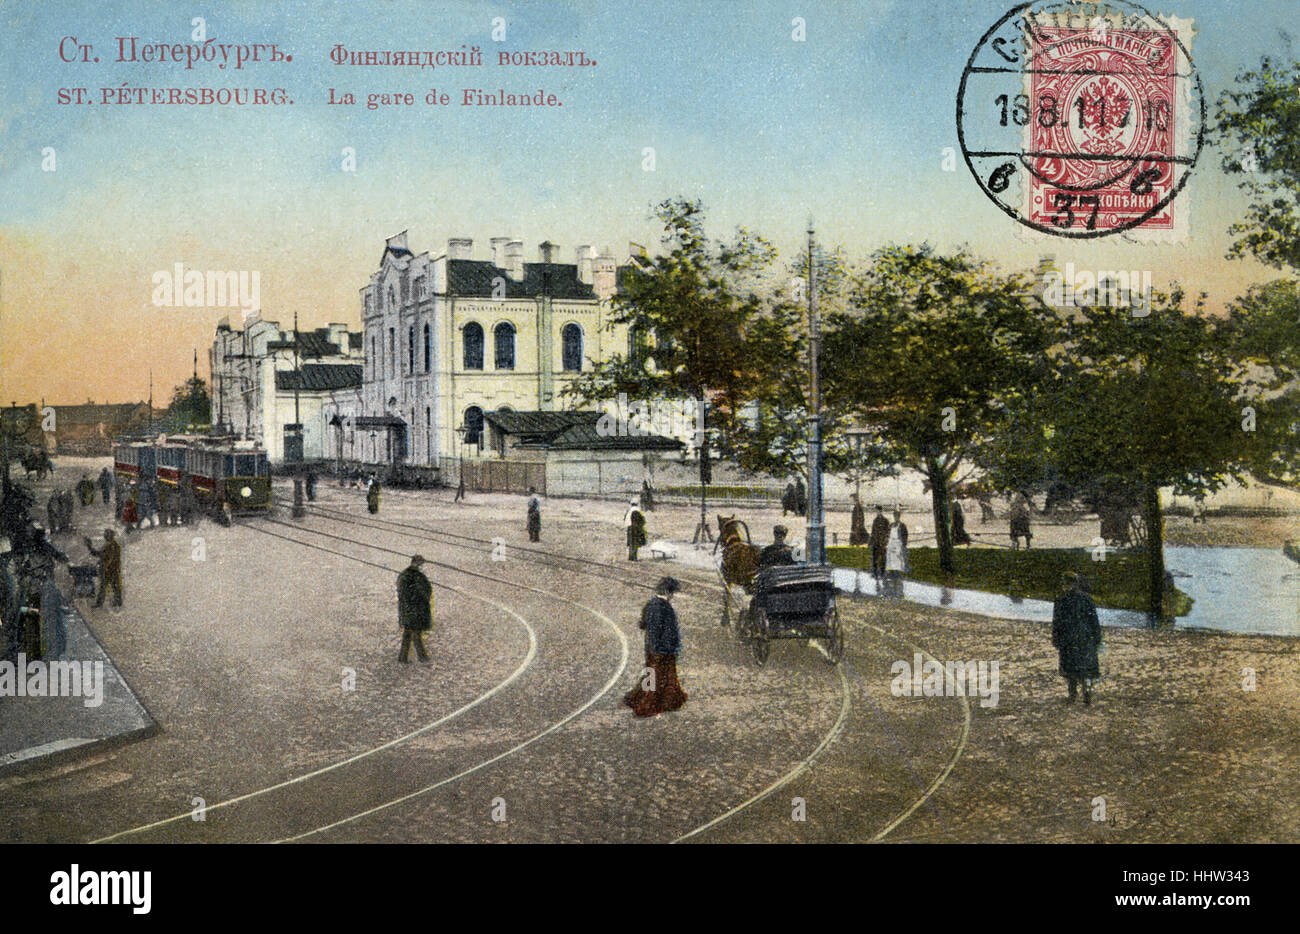 Finland Station, St Petersburg, Russia. Postcard, Stock Photo